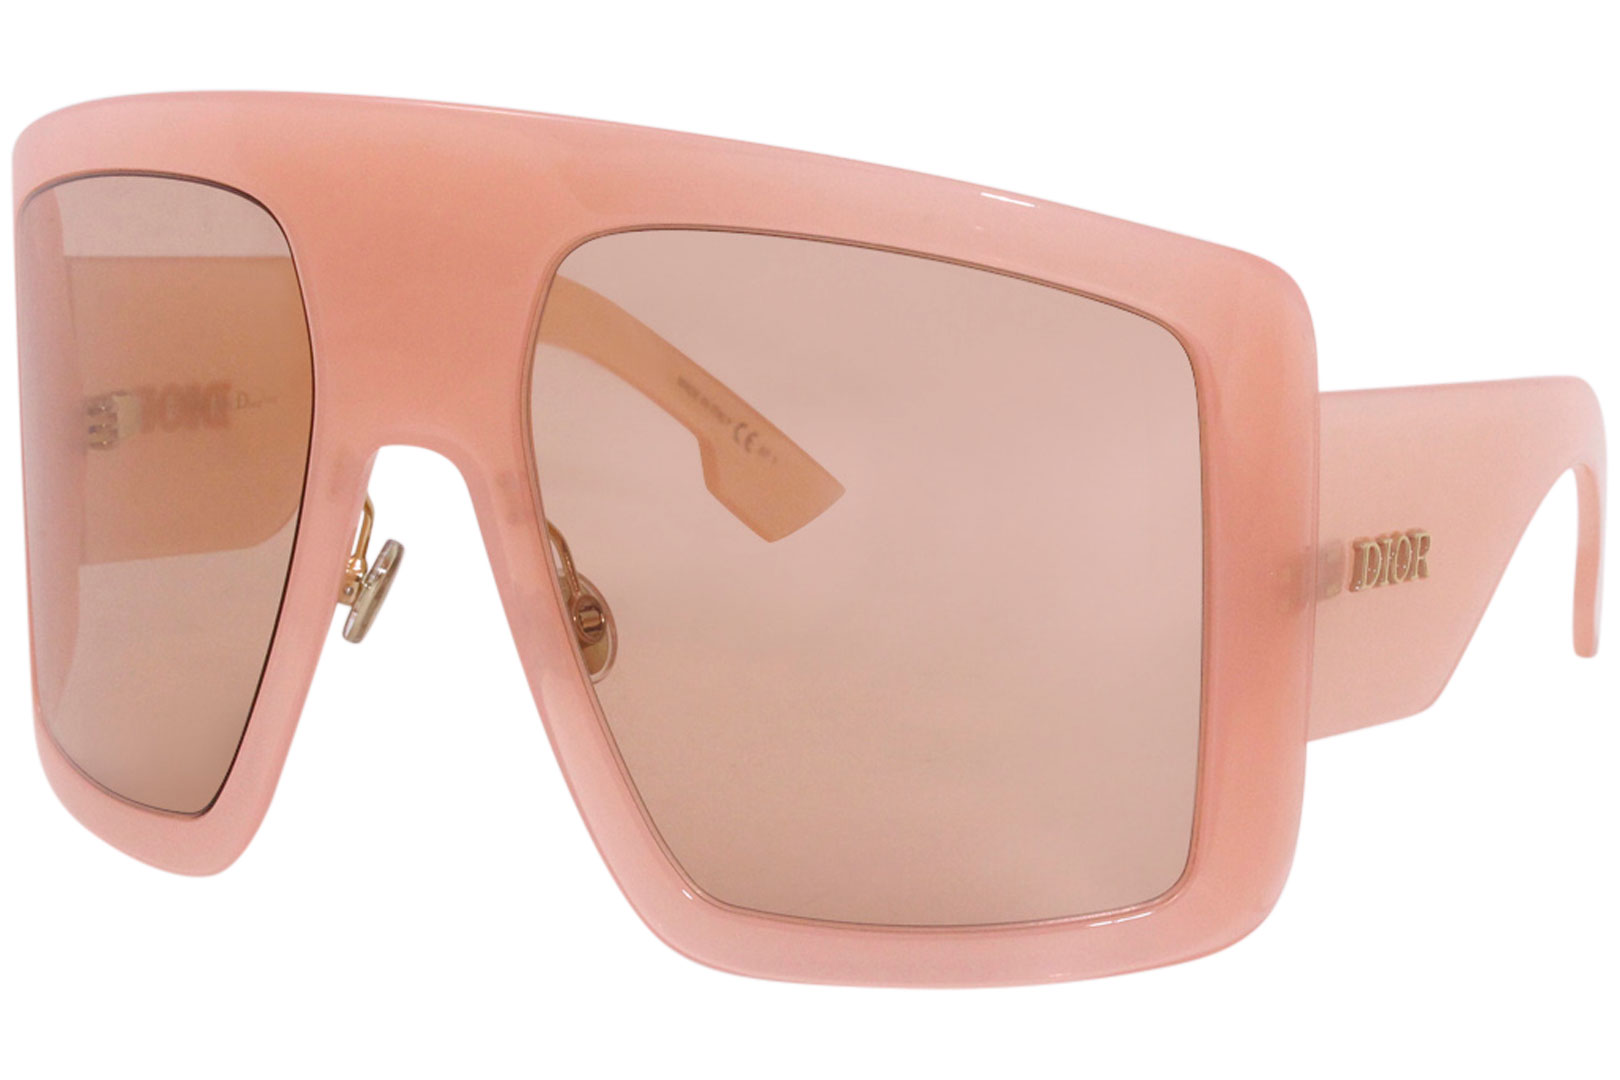 diorsolight1 sunglasses